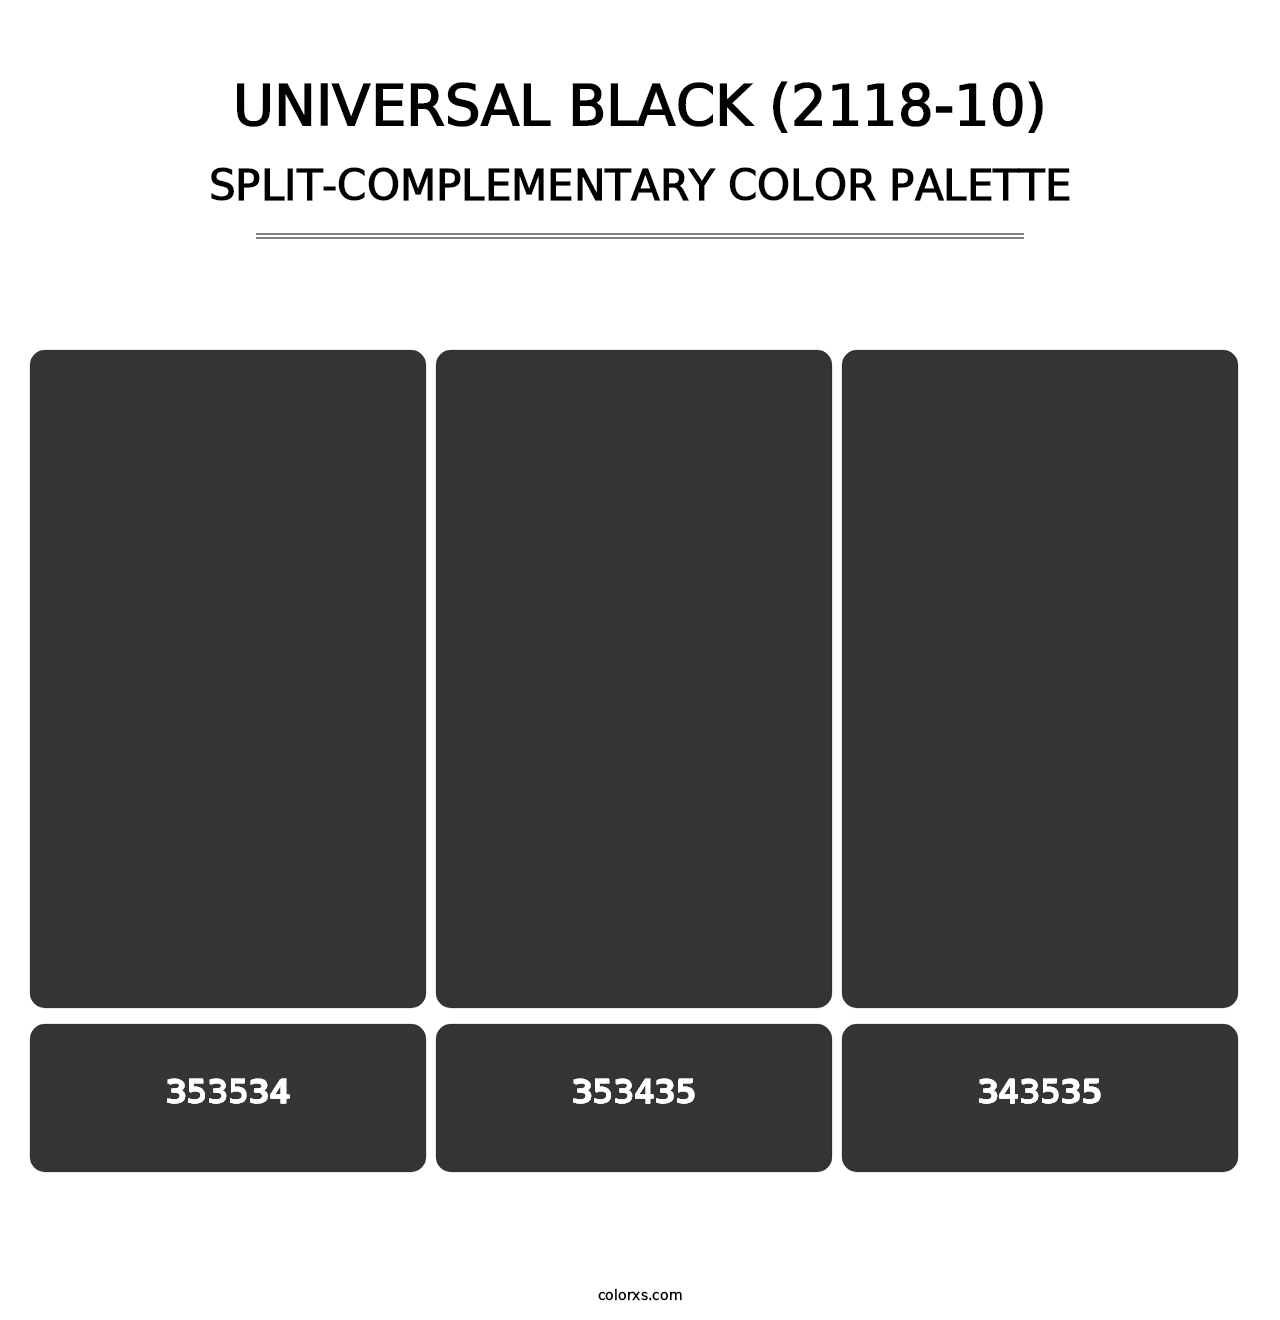 Universal Black (2118-10) - Split-Complementary Color Palette